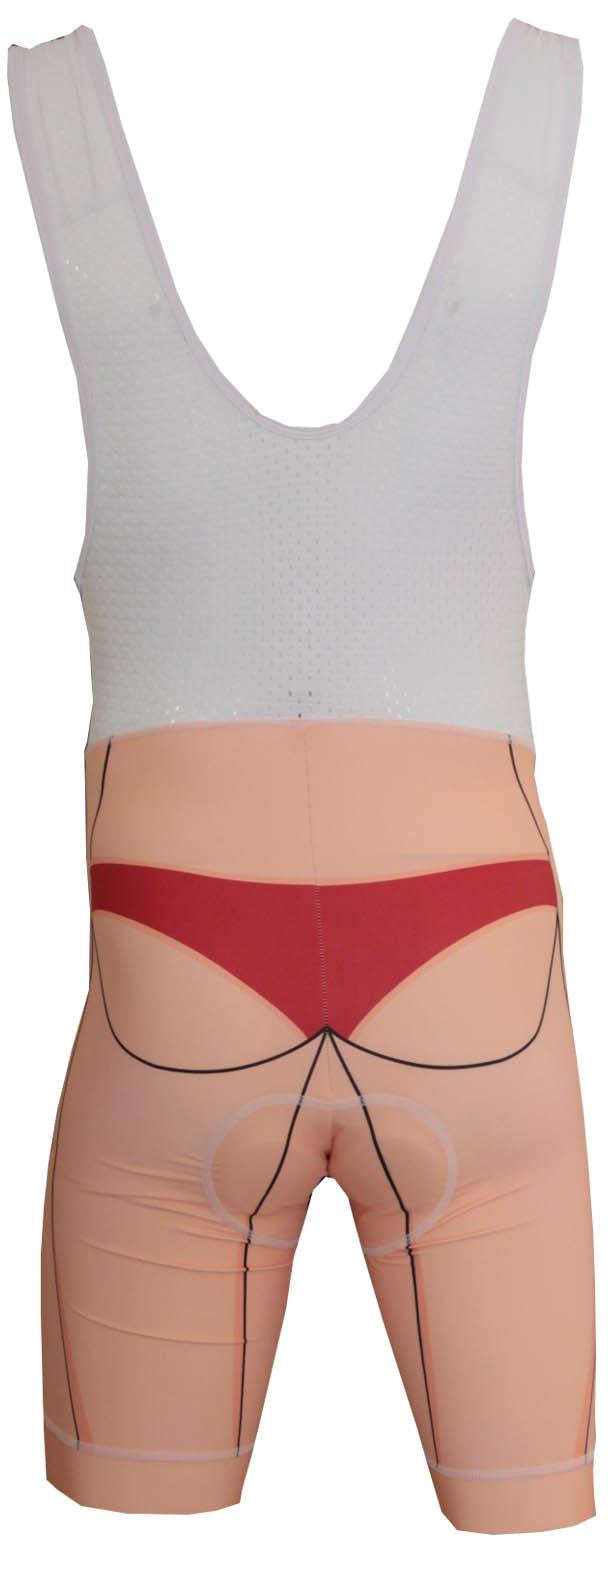 Women's Bikini Bib Shorts corbah